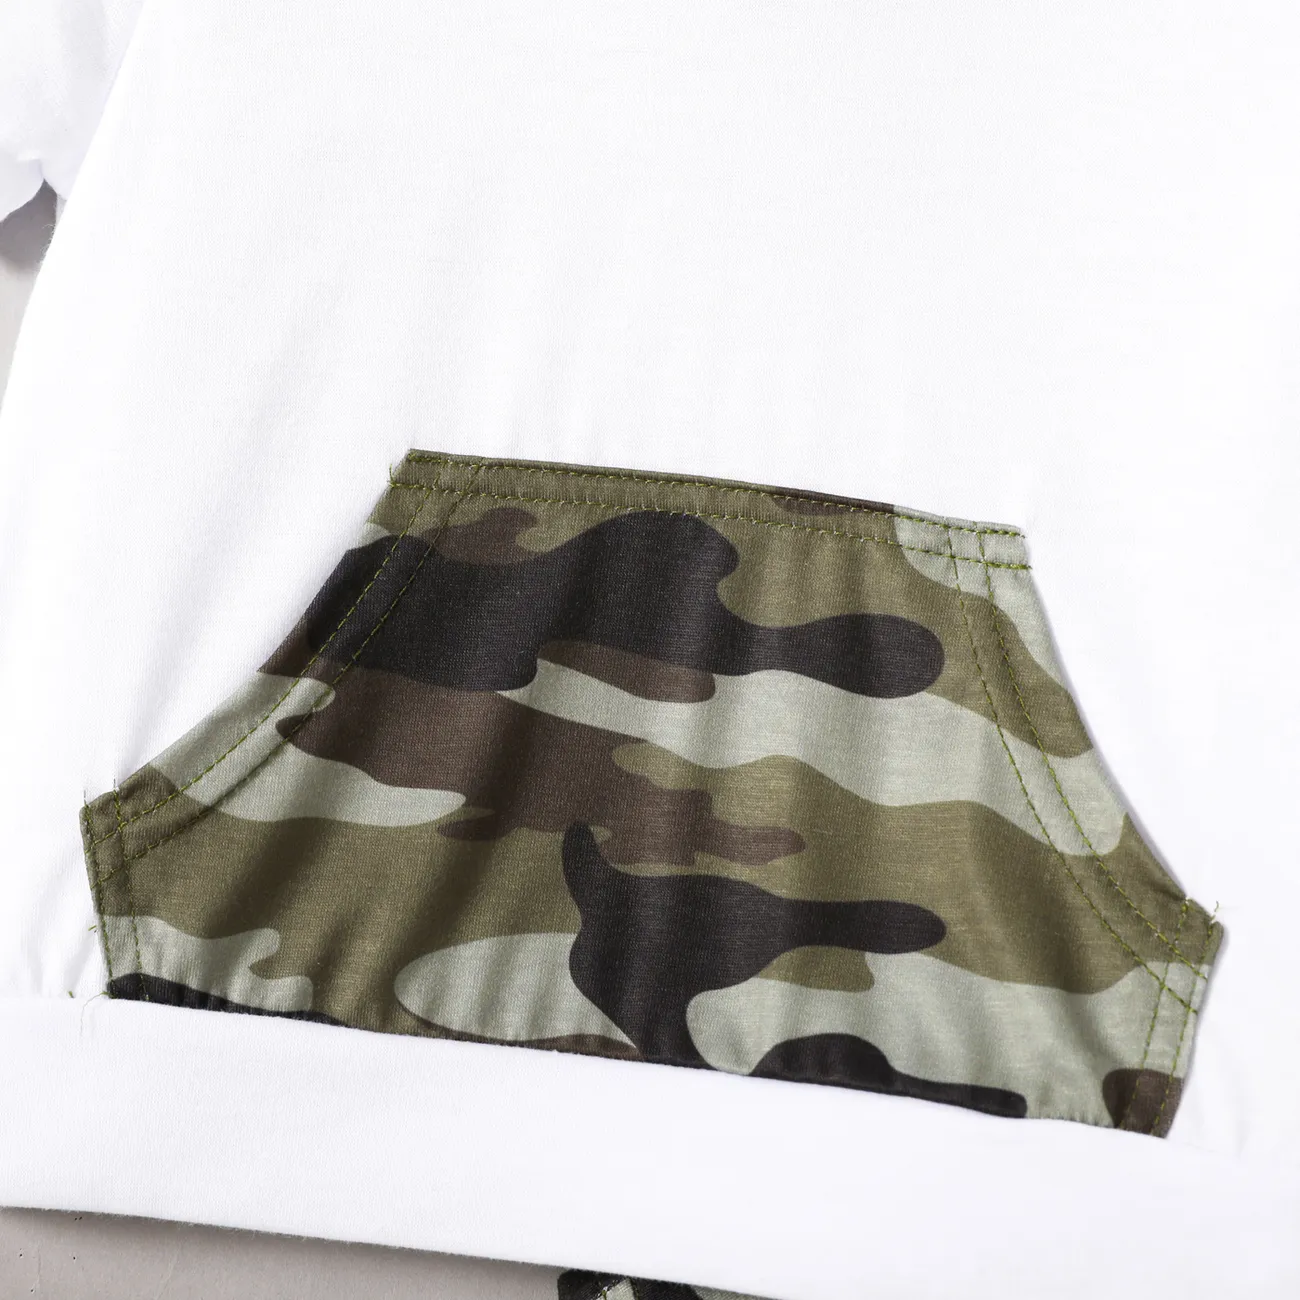 2-piece Toddler Boy Camouflage Print Hooded Tee and Elasticized Shorts Set White big image 1